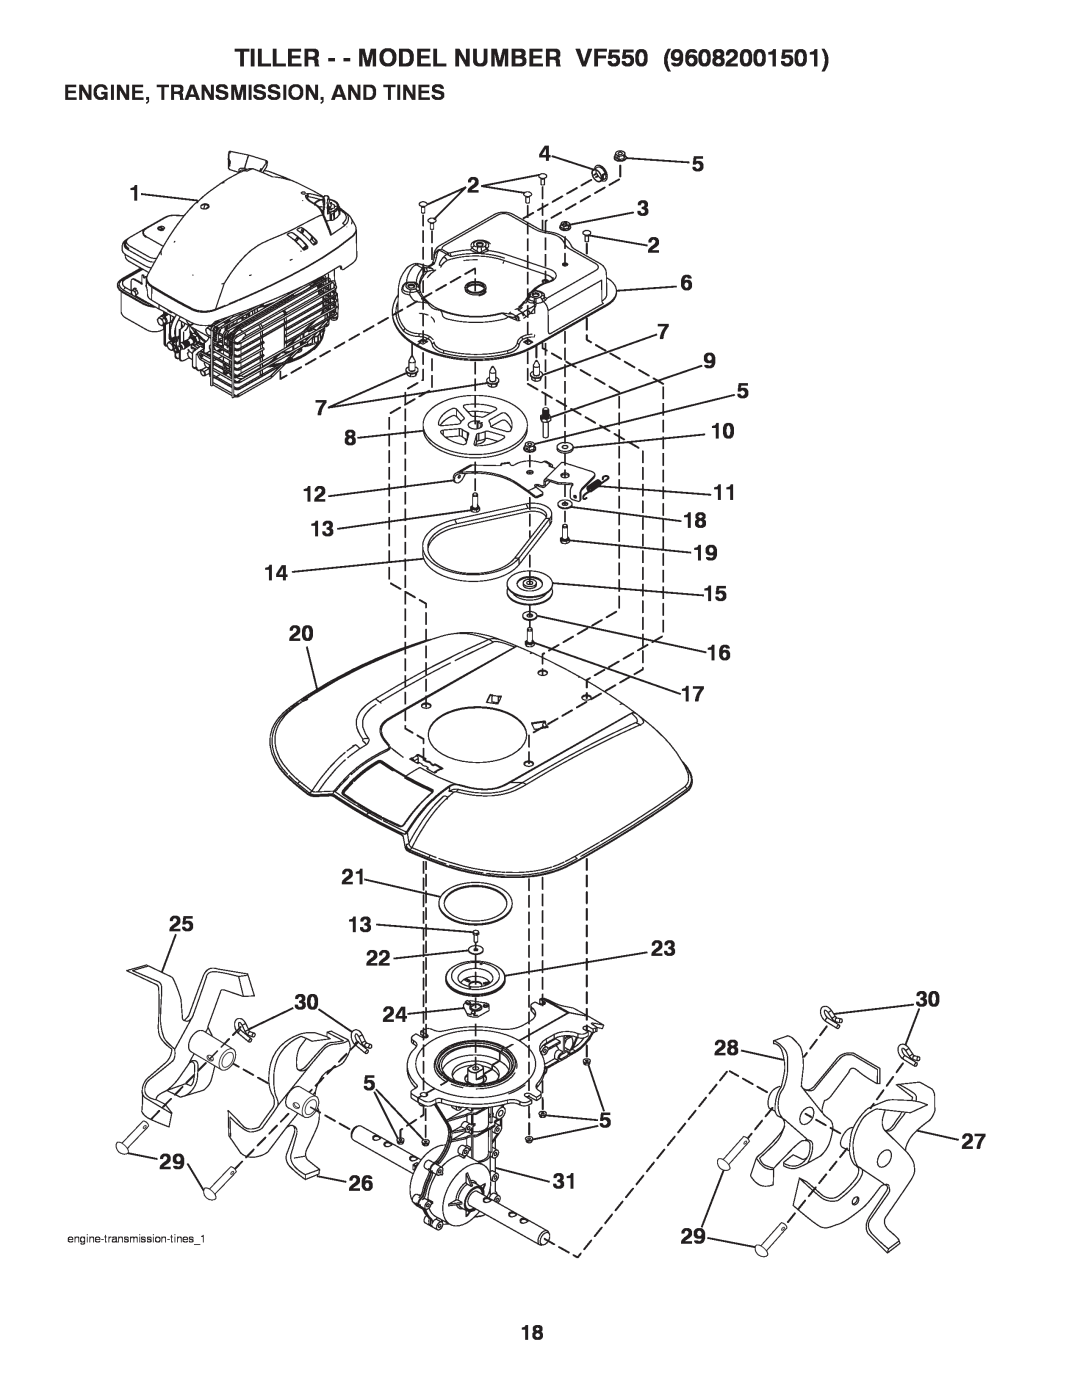 Poulan manual Engine, Transmission, And Tines, TILLER - - MODEL NUMBER VF550, 1 25 29, engine-transmission-tines 